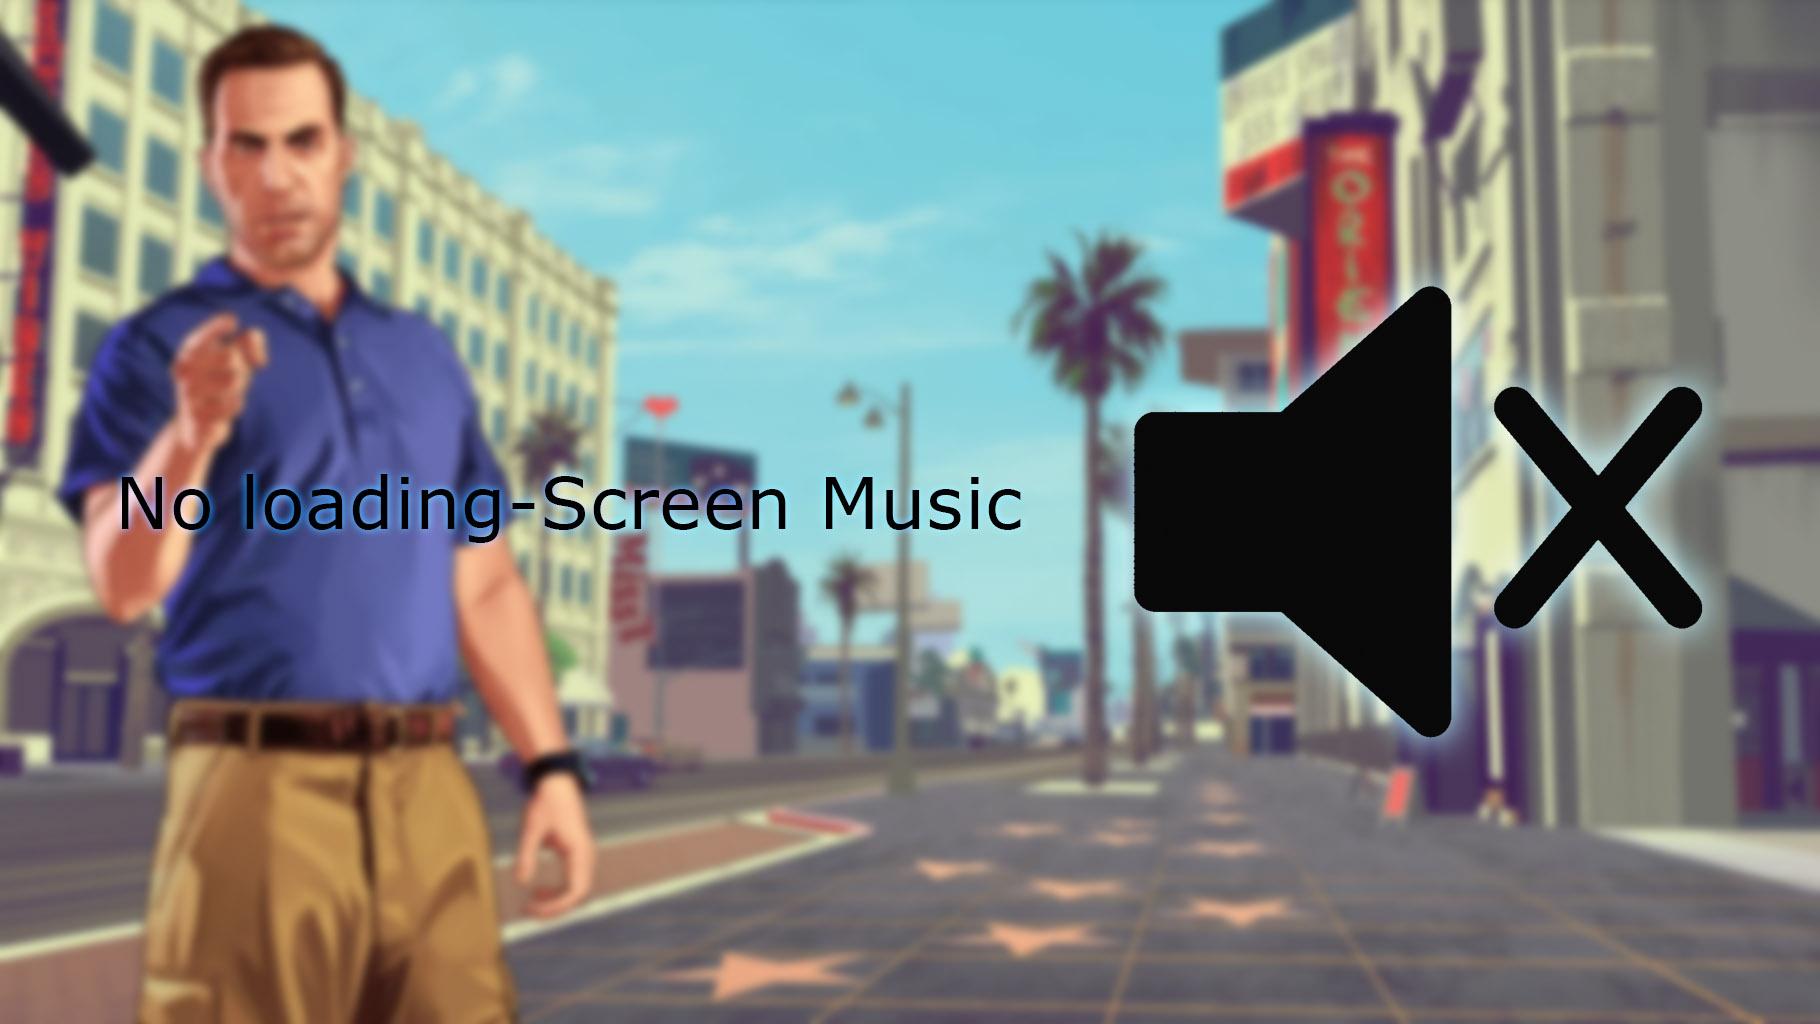 gta 4 loading screen song